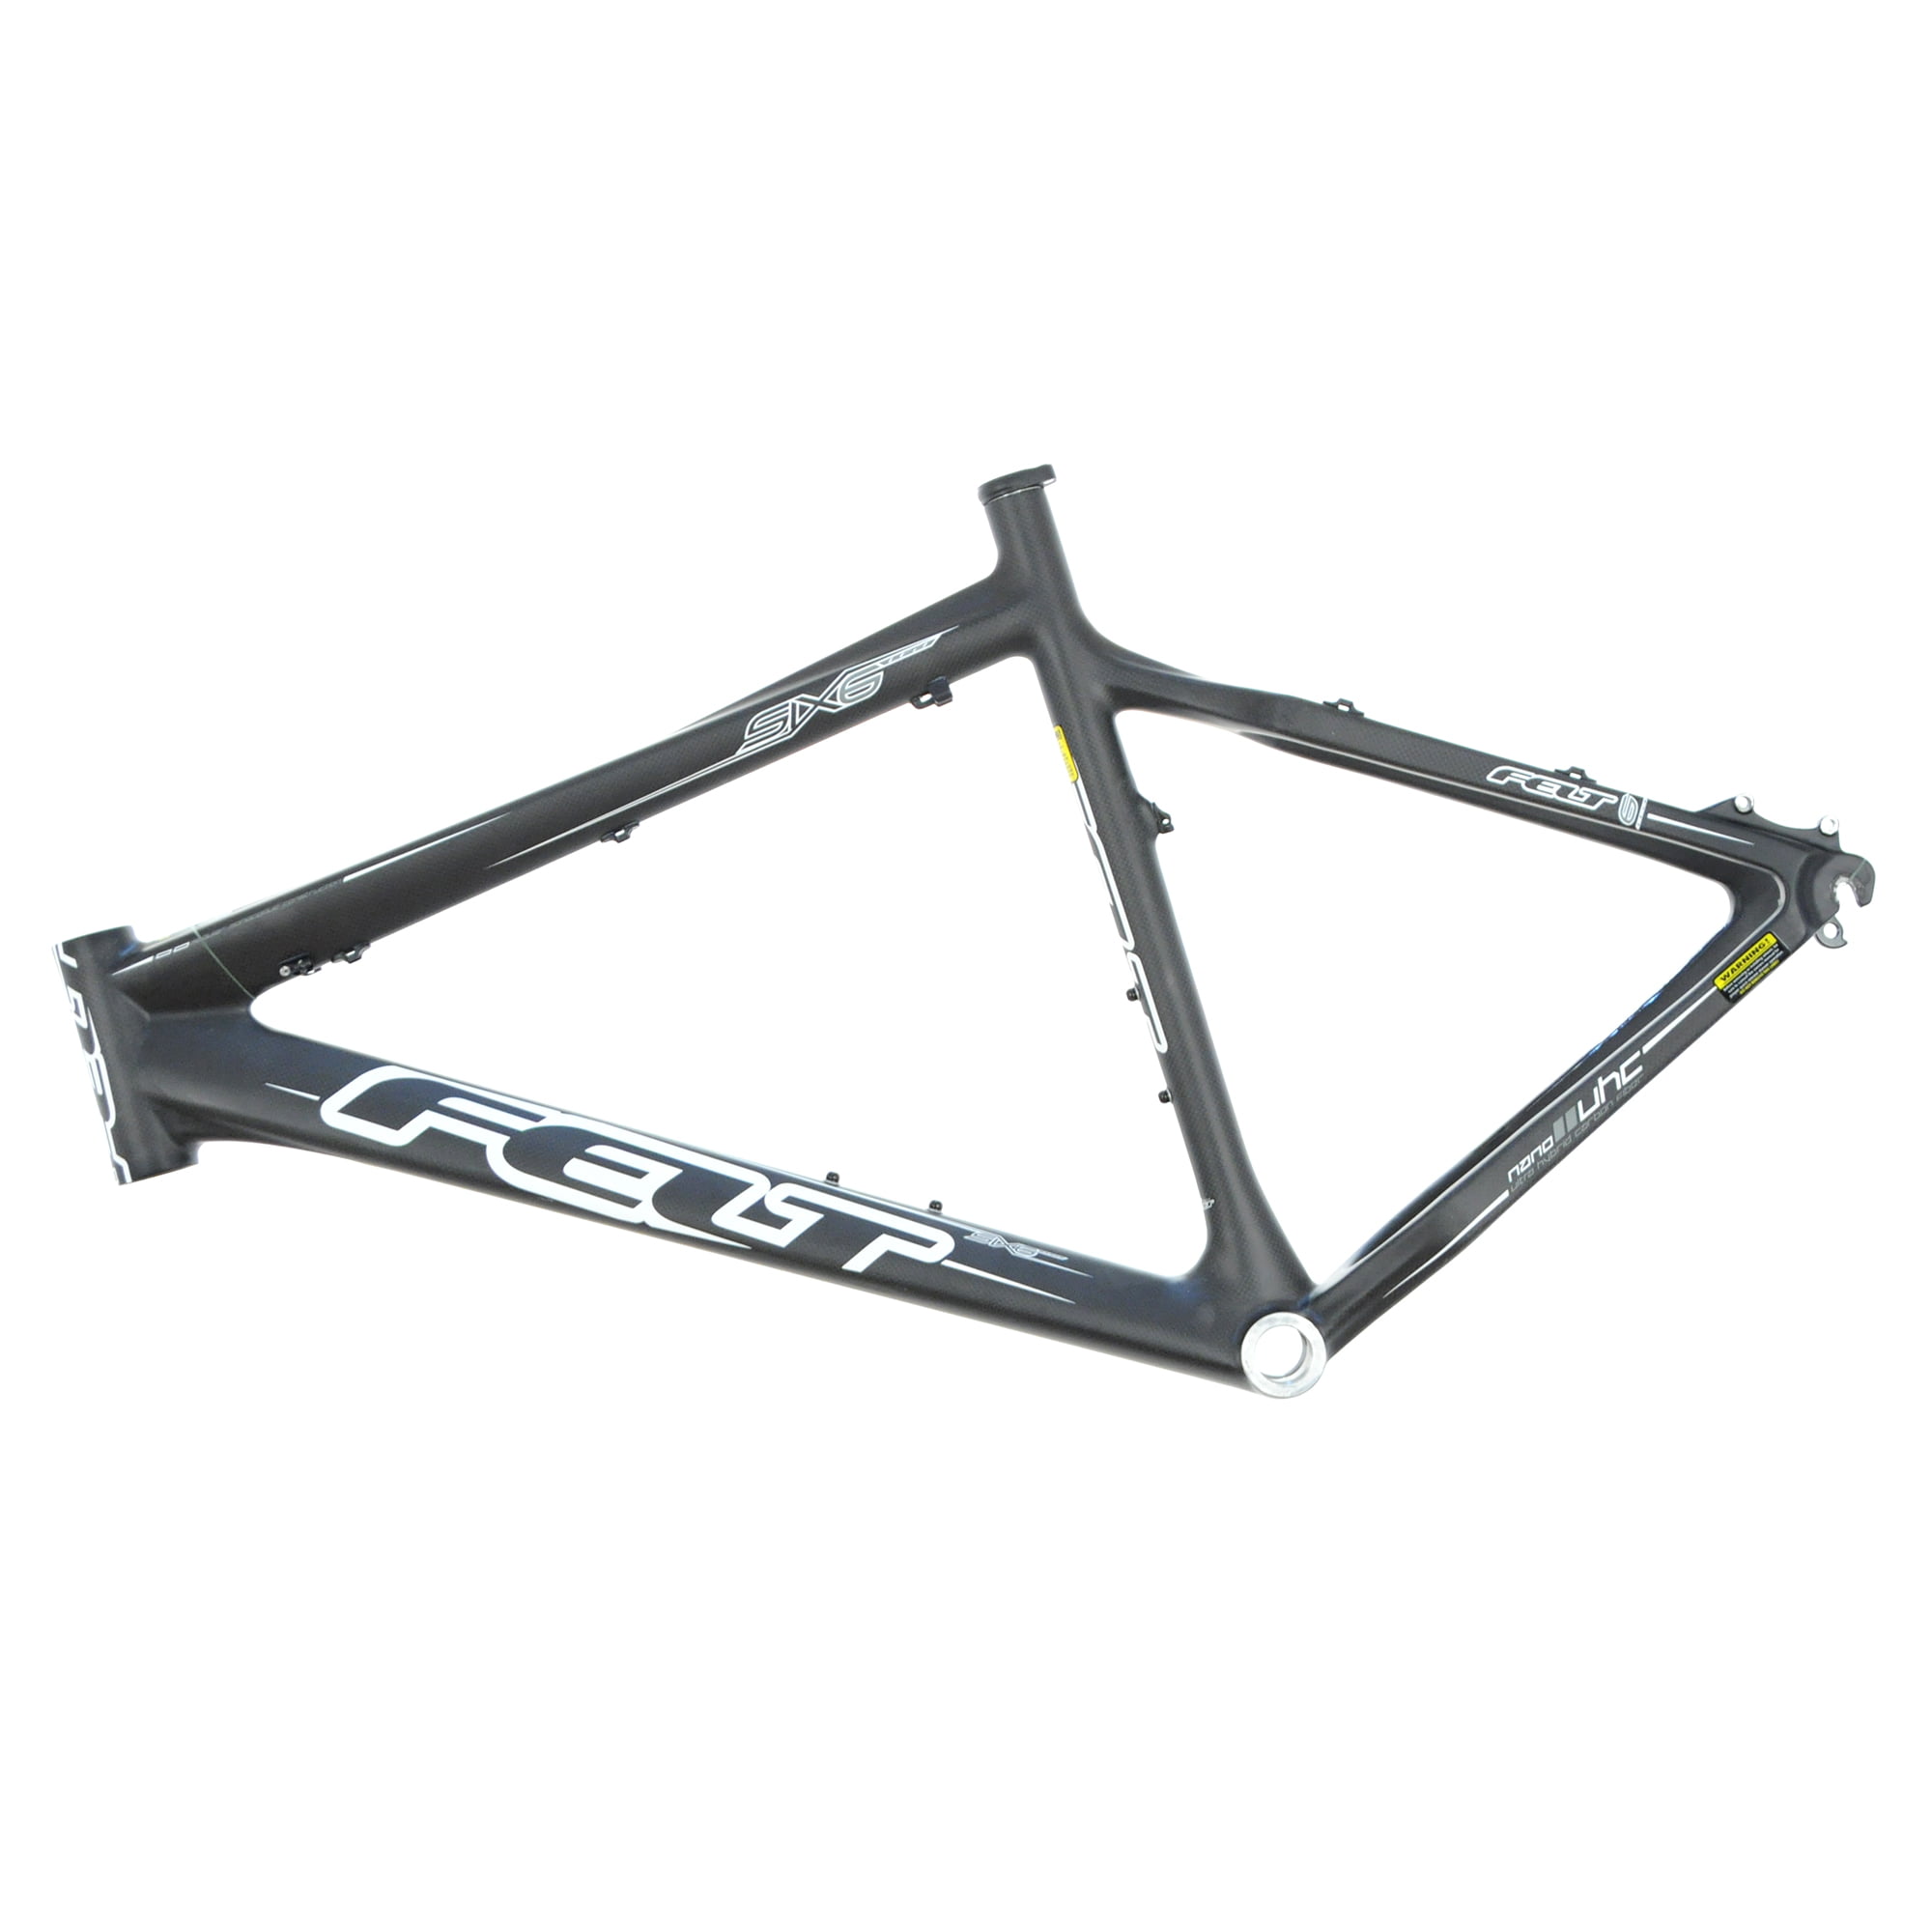 Rauw uitvinding verdrietig Felt SIX LTD 26" Carbon MTB Mountain Bike Frame Frameset // 21" X-Large XL  - Walmart.com